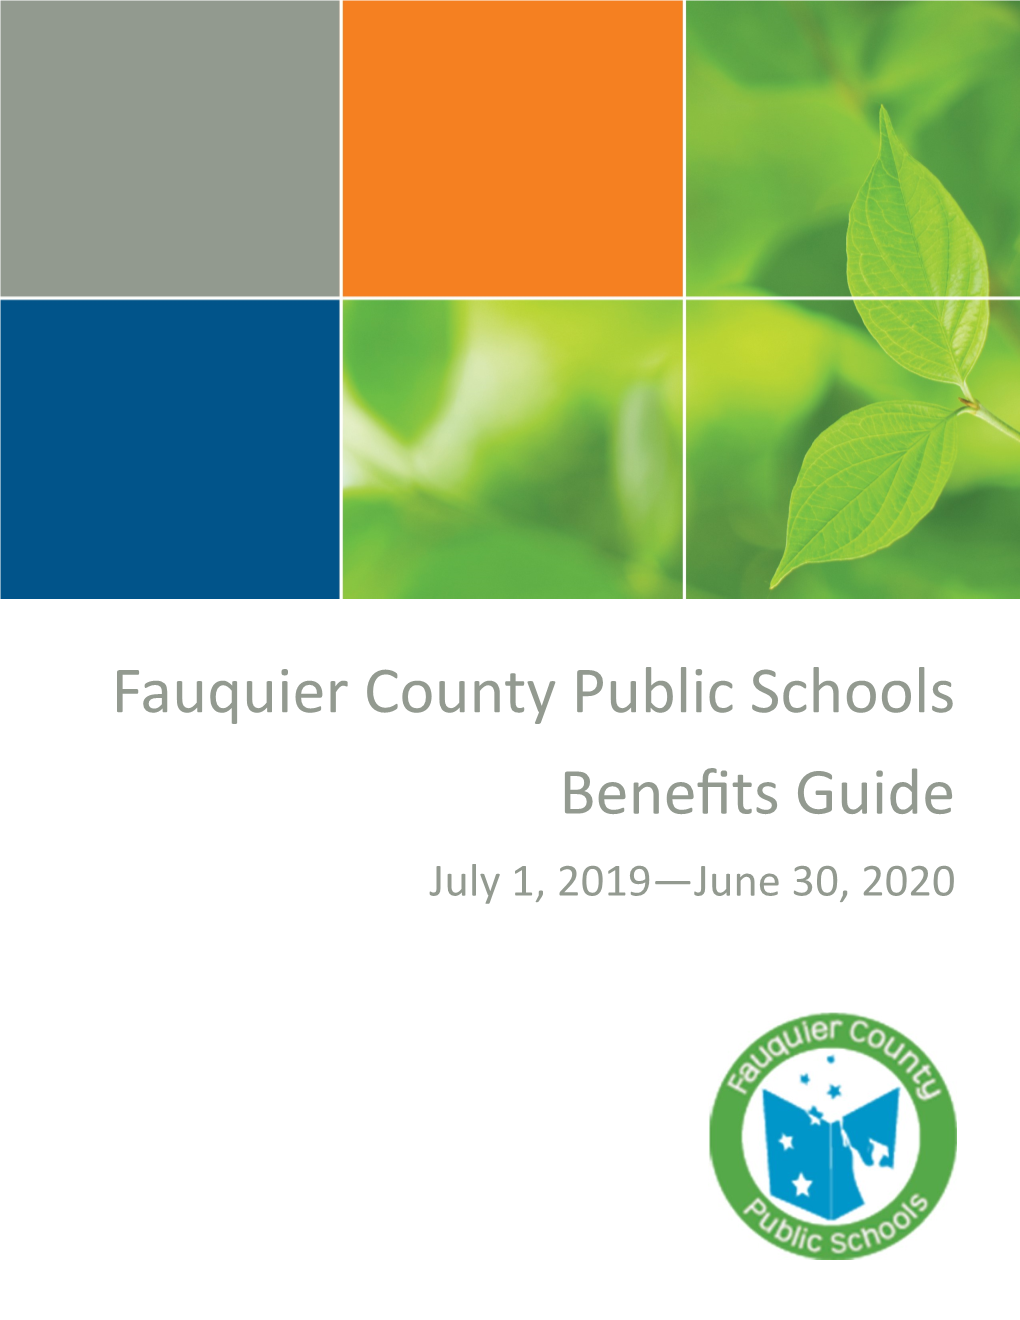 Fauquier County Public Schools Benefits Guide July 1, 2019—June 30, 2020